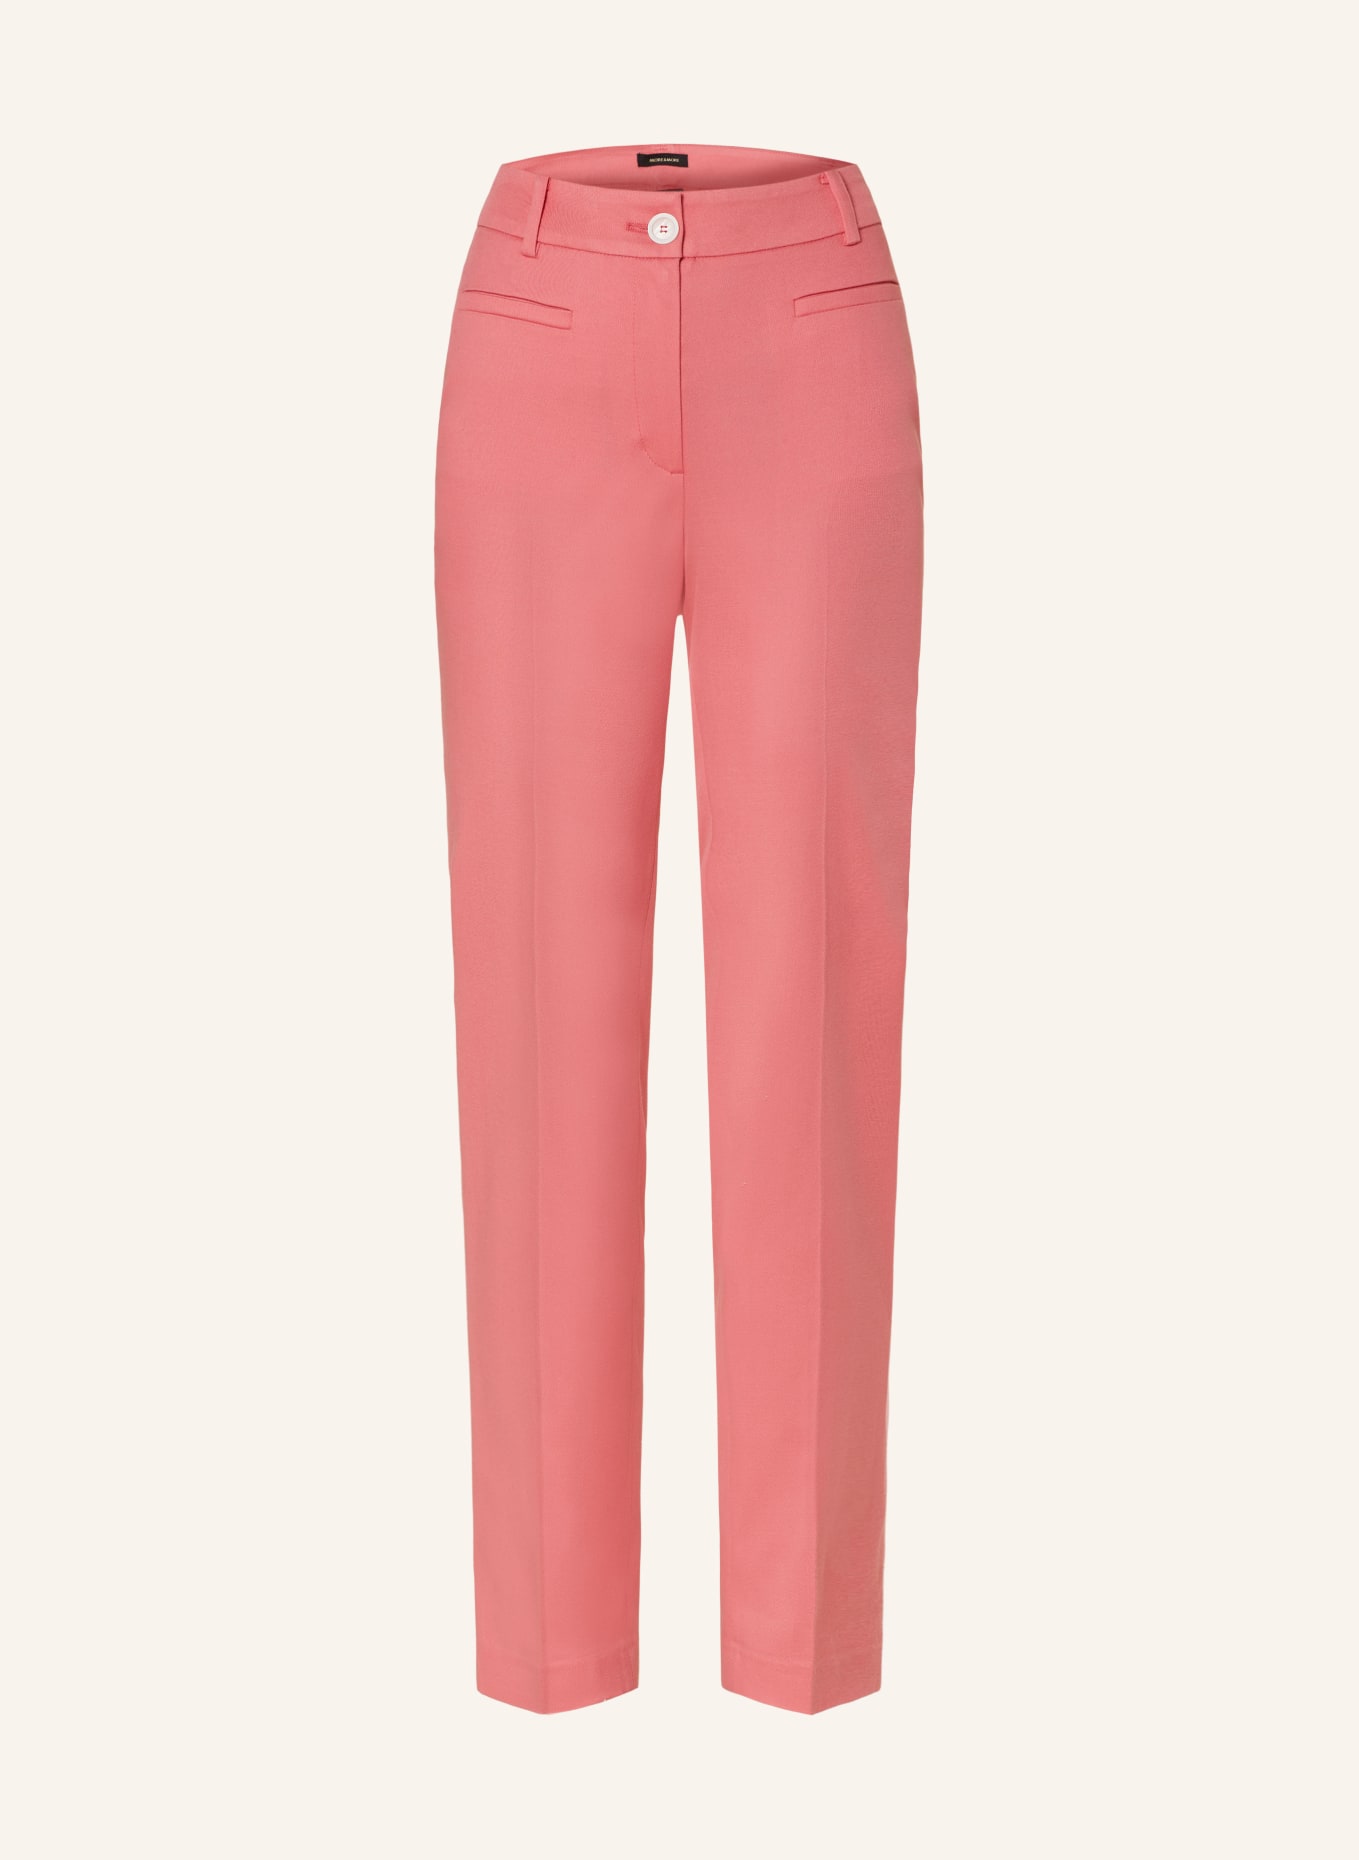 MORE & MORE Jerseyhose, Farbe: 0835 sorbet pink (Bild 1)